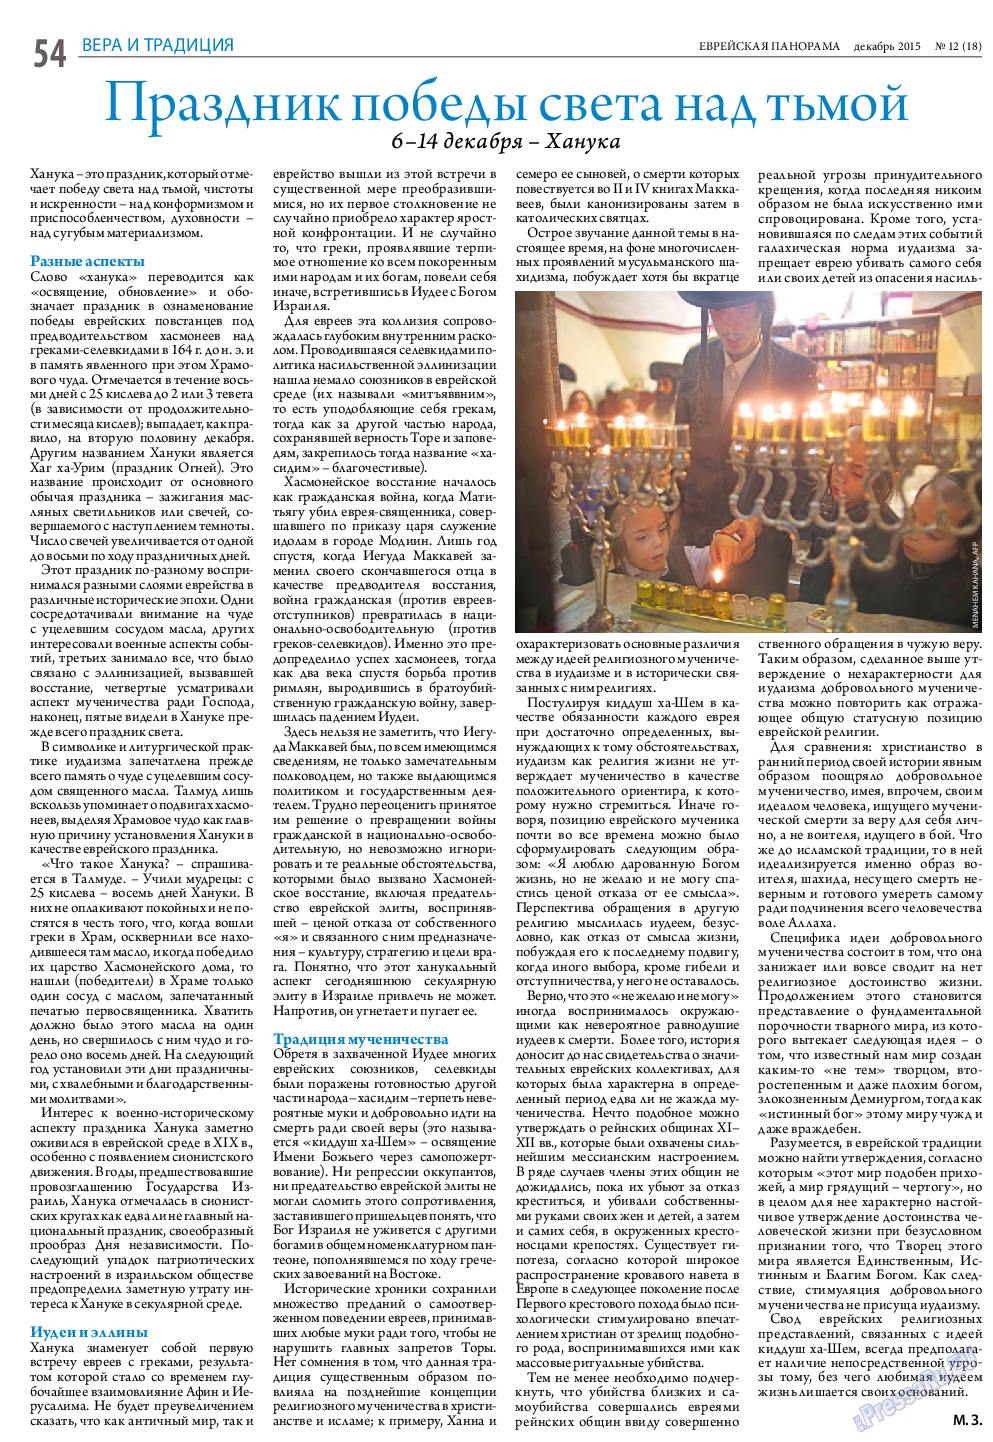 Еврейская панорама, газета. 2015 №12 стр.54